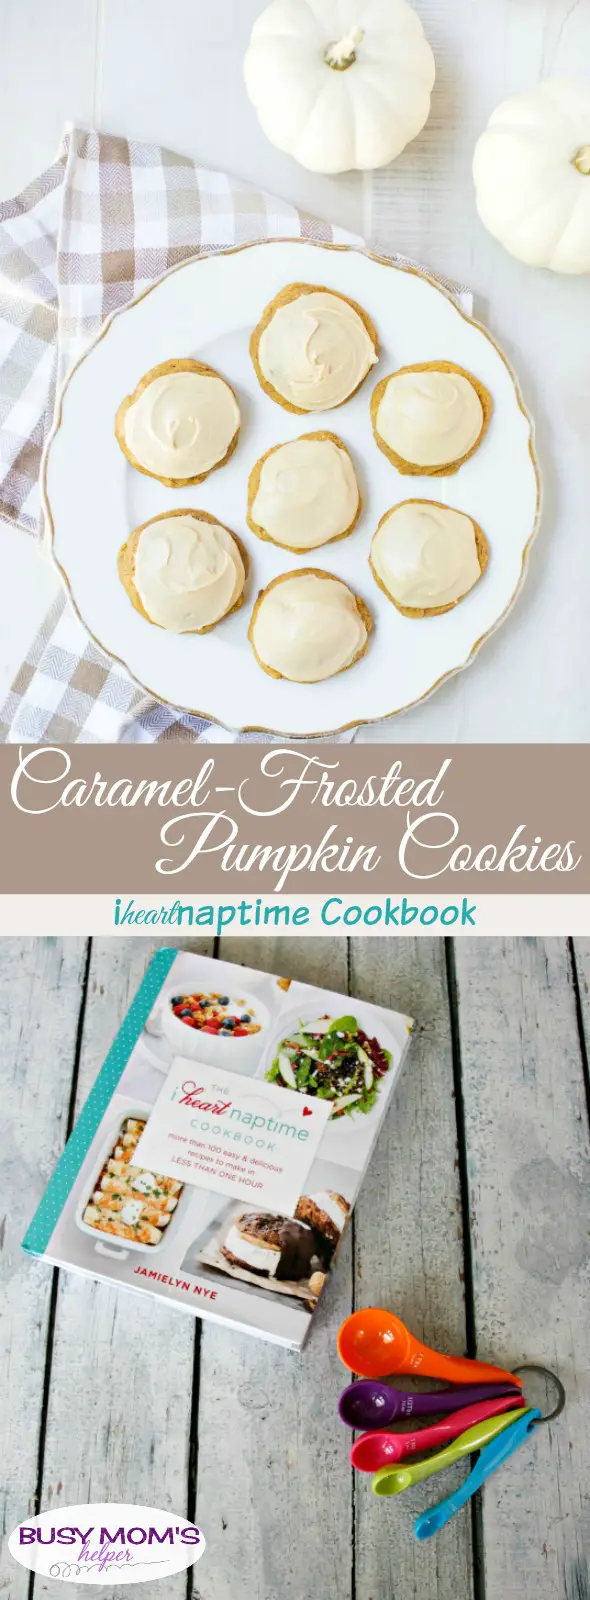 Caramel Frosted Pumpkin Cookies & IHeartNaptime Cookbook #naptimecookbook #sponsored